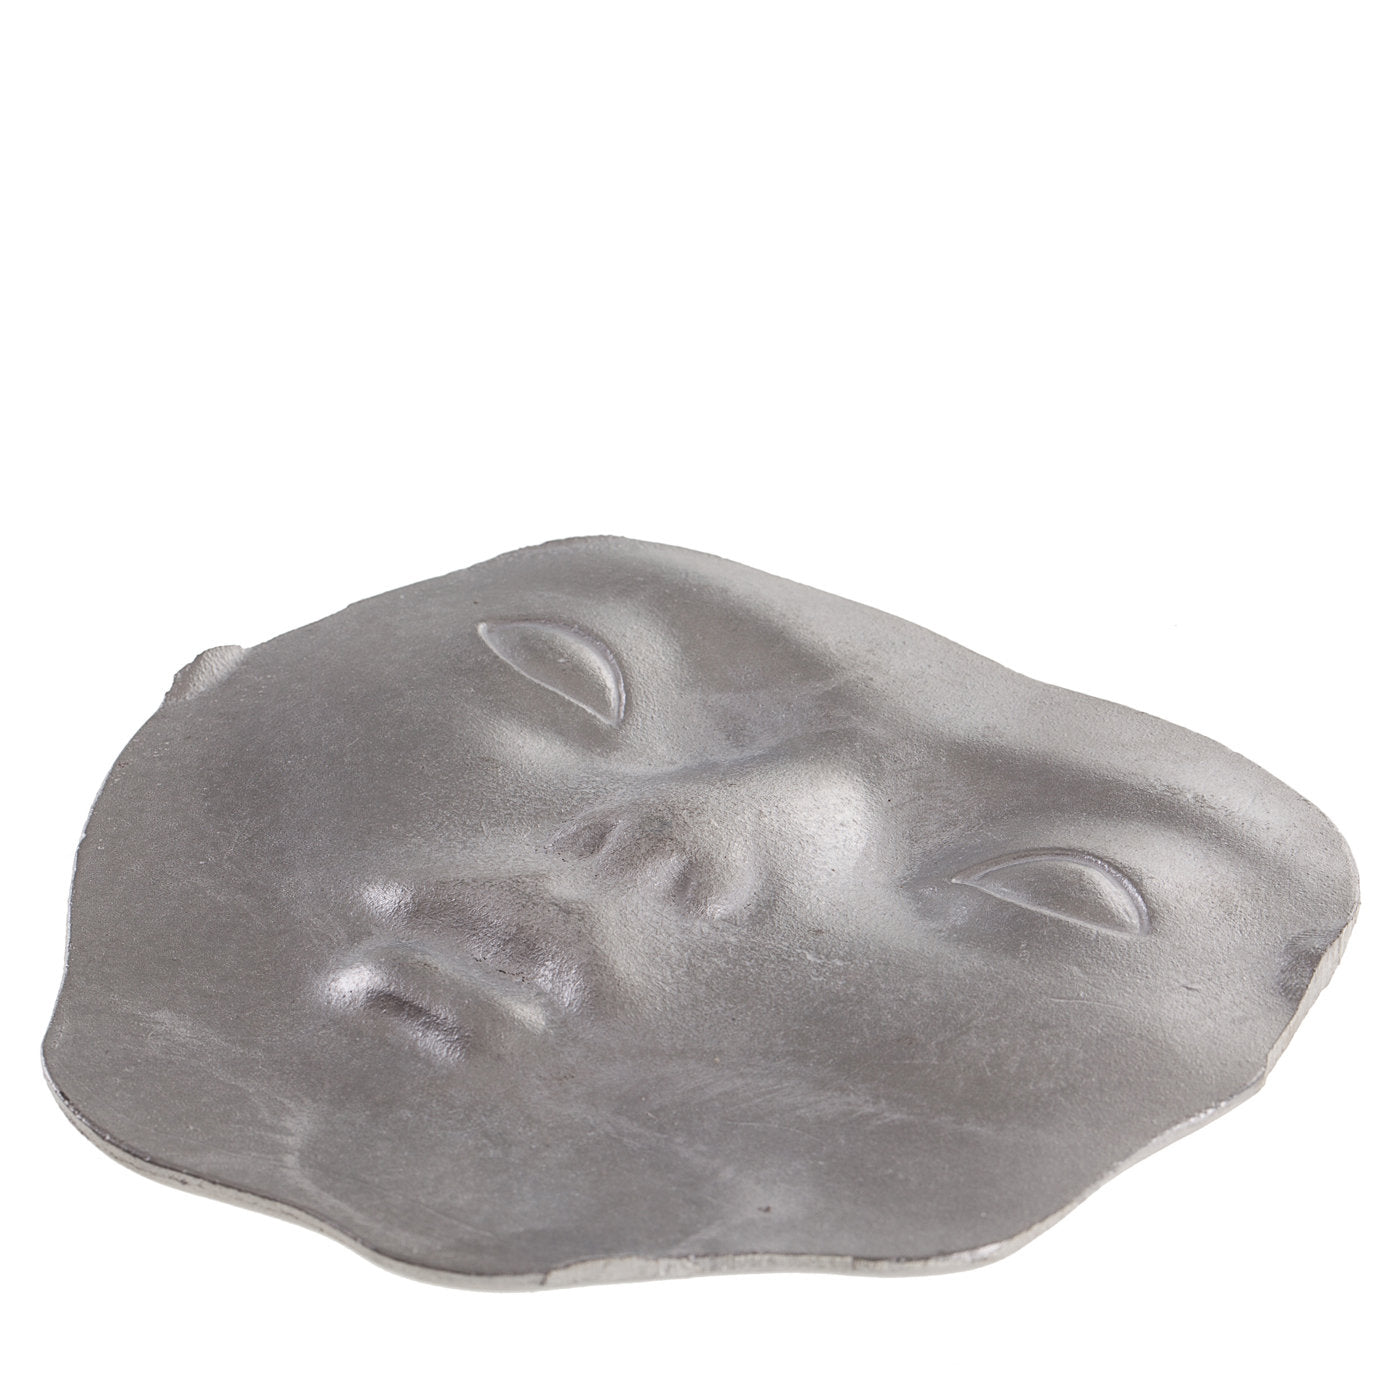 The Human Face Fragment Sculpture - Alternative view 1